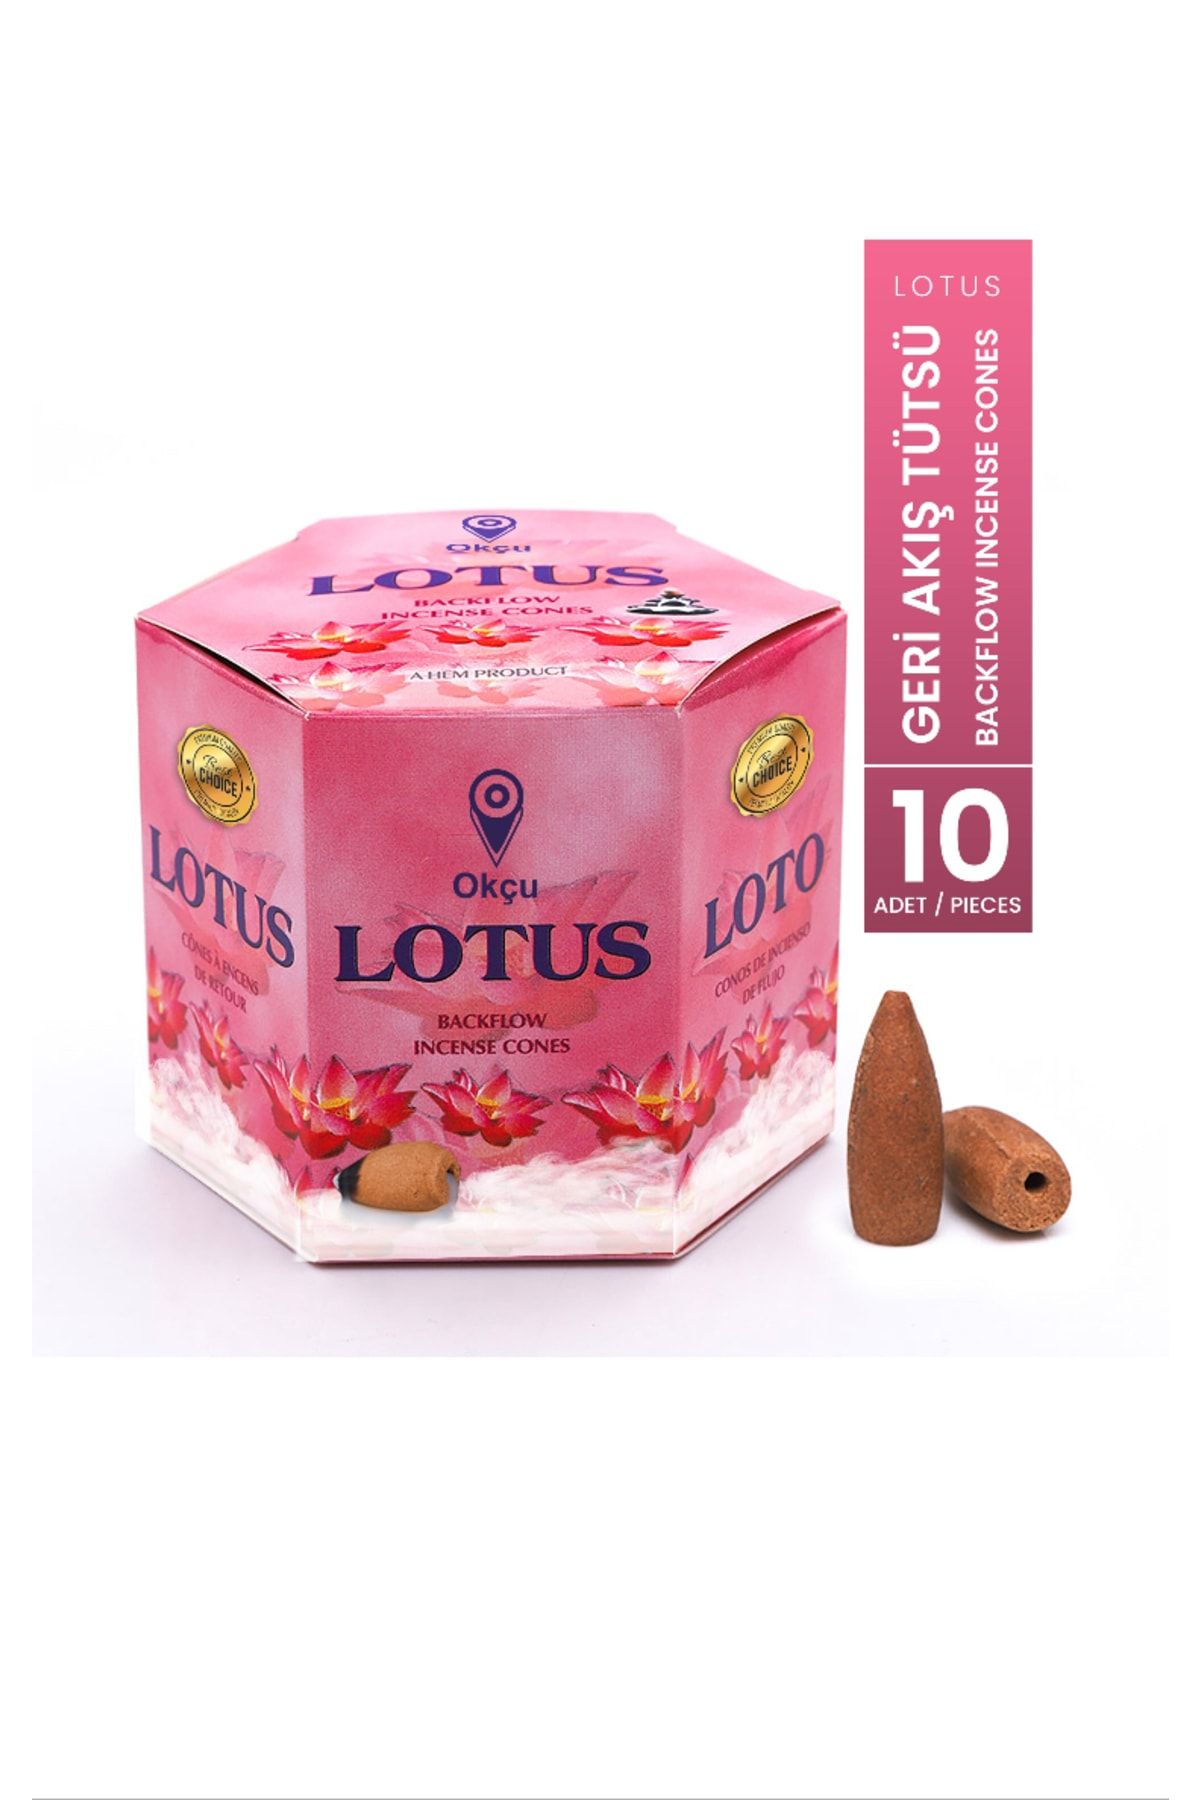 Okçu Lotus Loto Geri Akış Tütsü Şelale Konik Backflow Incense Cones 10 Adet / Cones